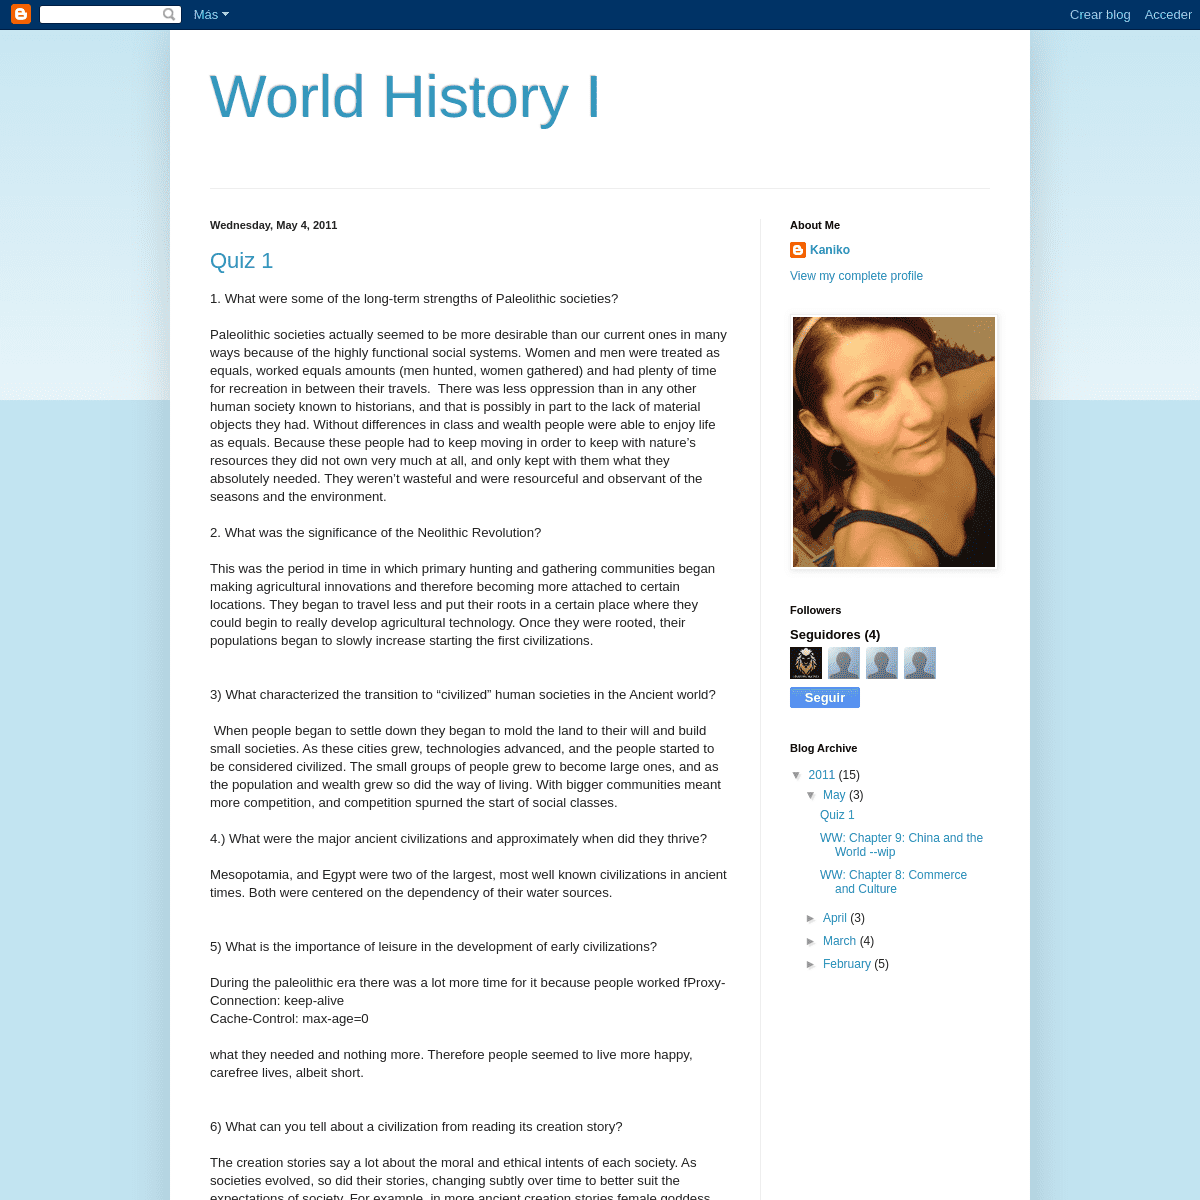 A complete backup of worldhistory-kaniko.blogspot.com